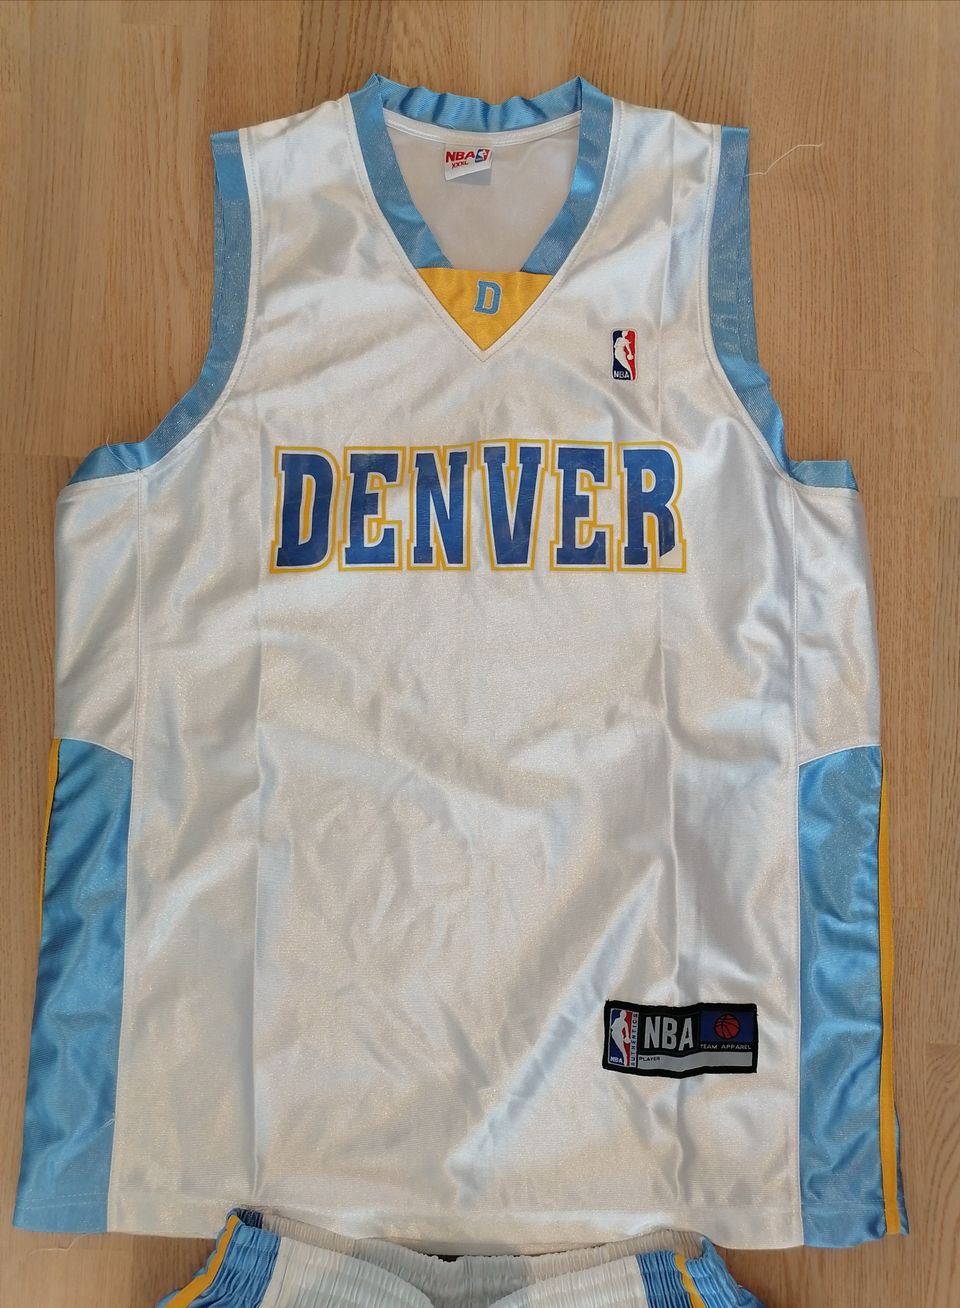 Denver Nuggets, Lacoste, Nike (S-XL)